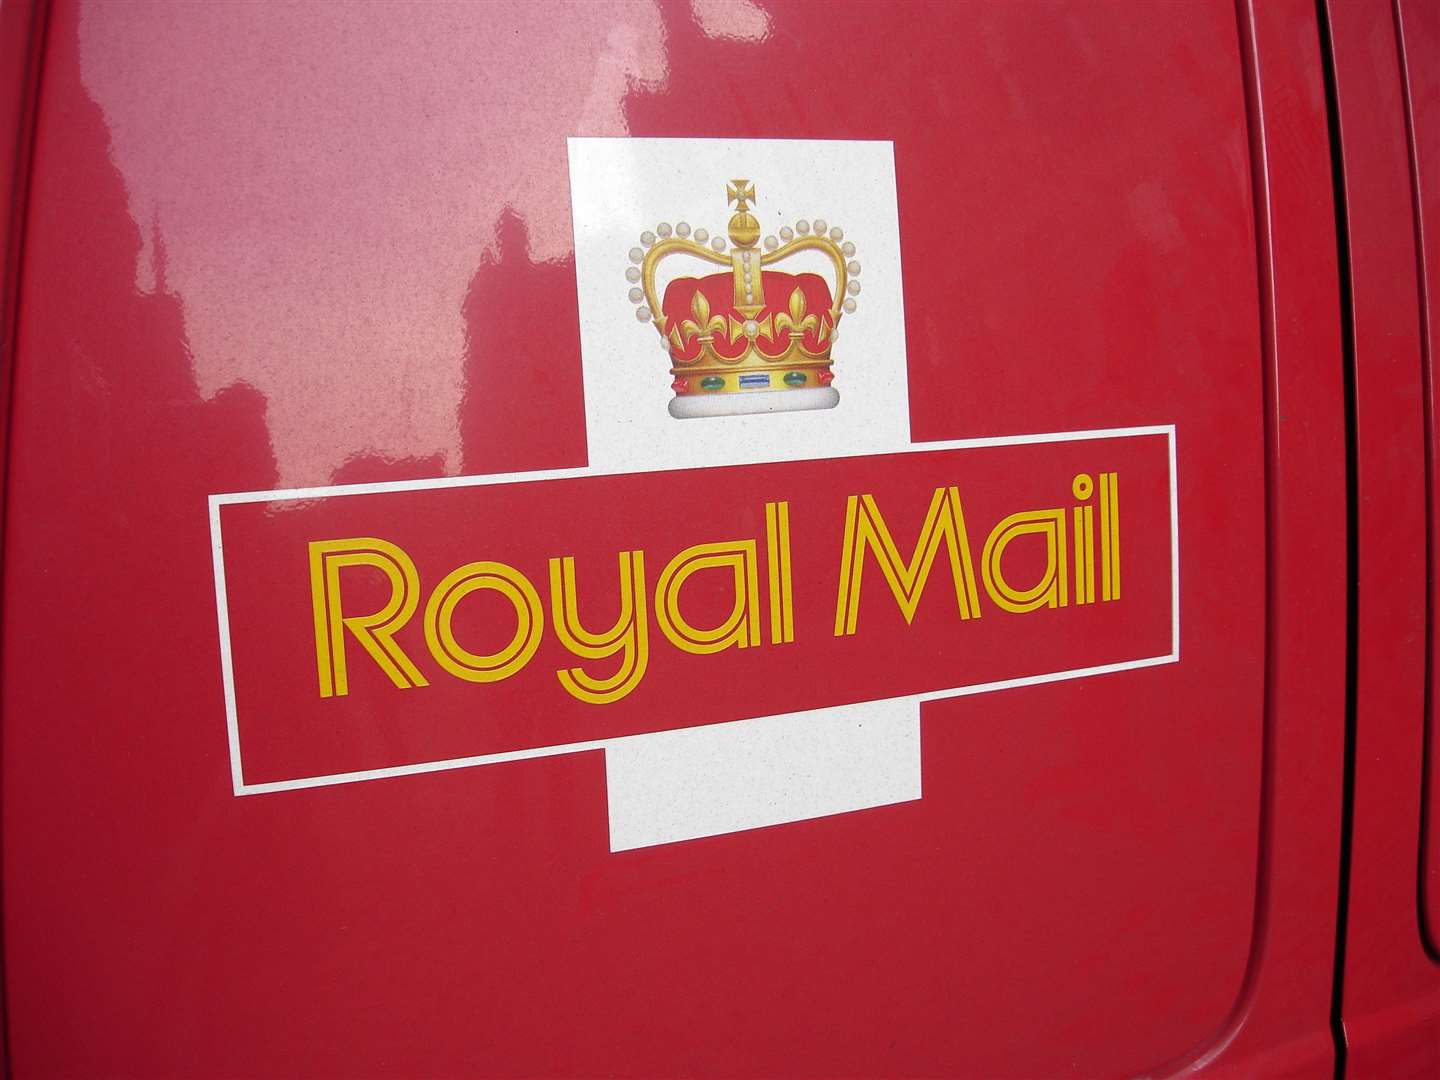 Royal Mail news.